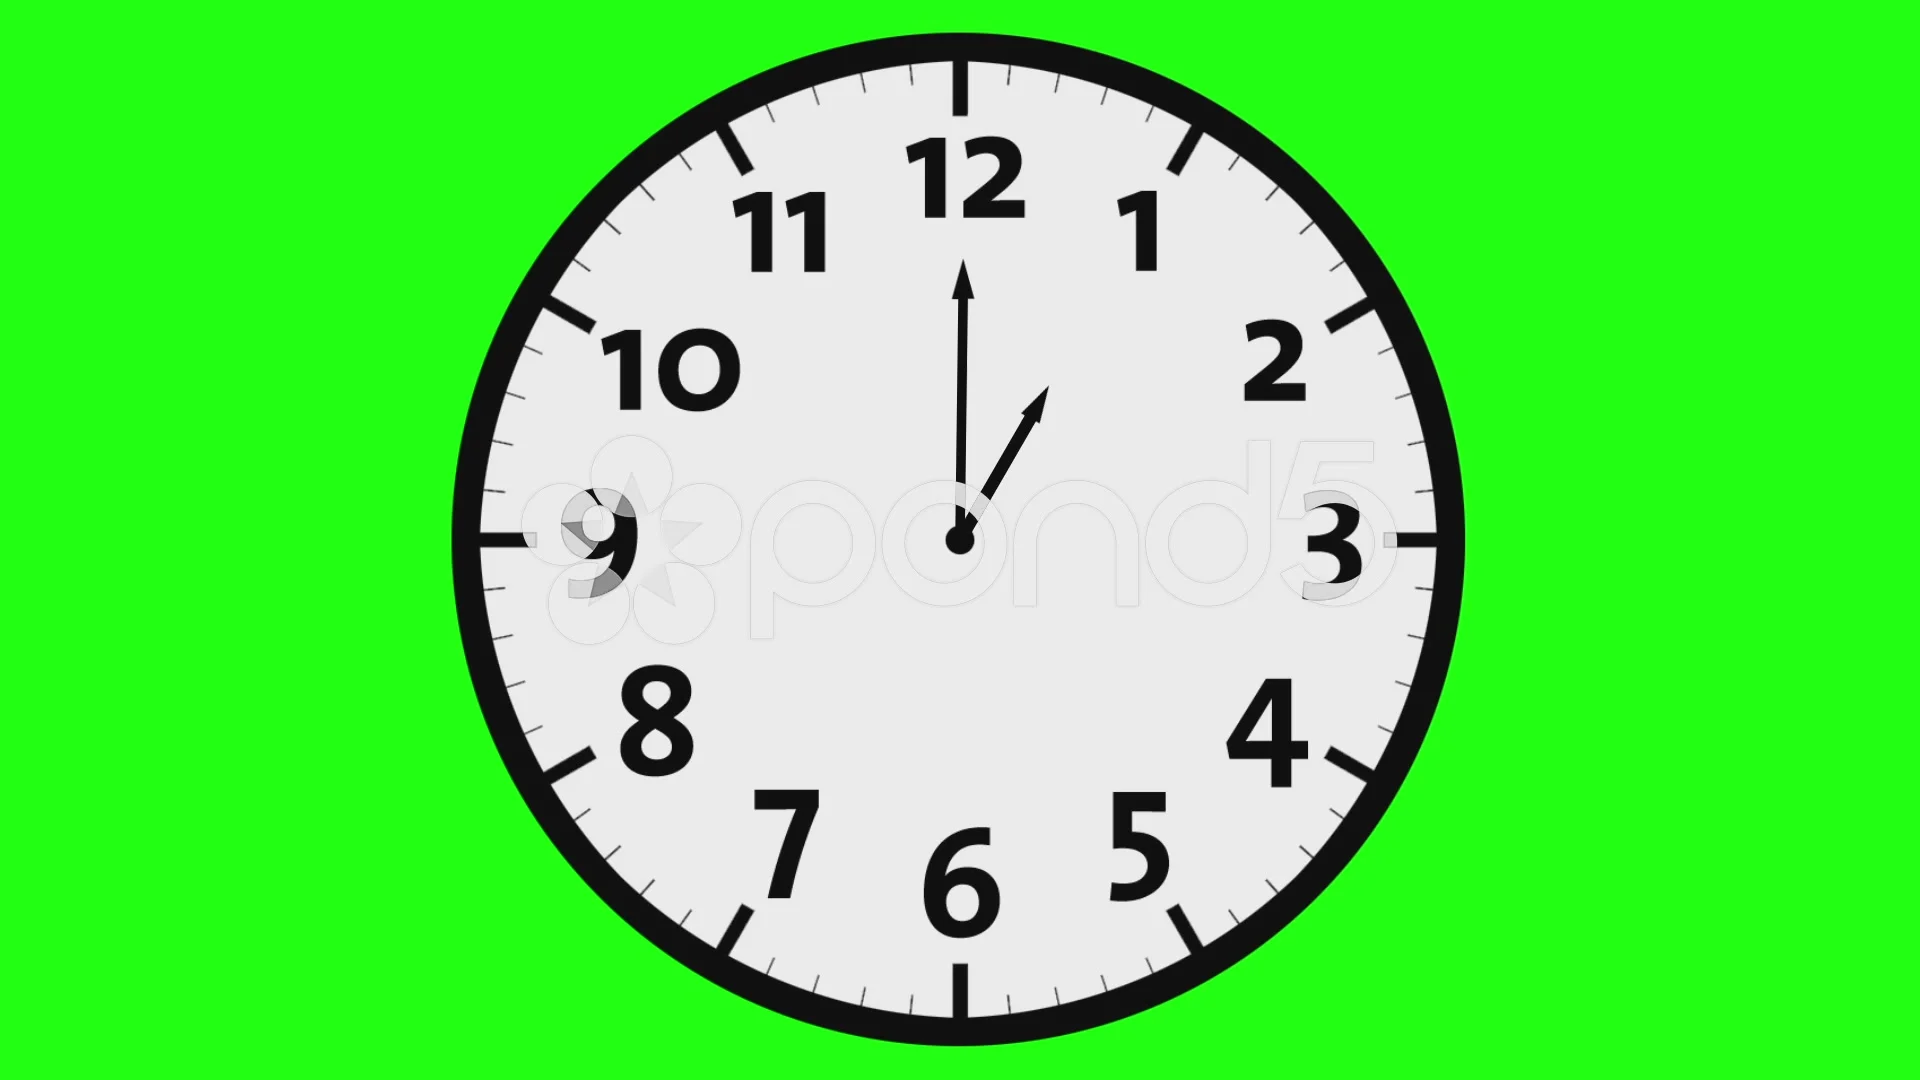 Ча сы. Часы на зеленом фоне. Часы на хромакее. Часы на салатовом фоне. Часы настенные с зеленым фоном.